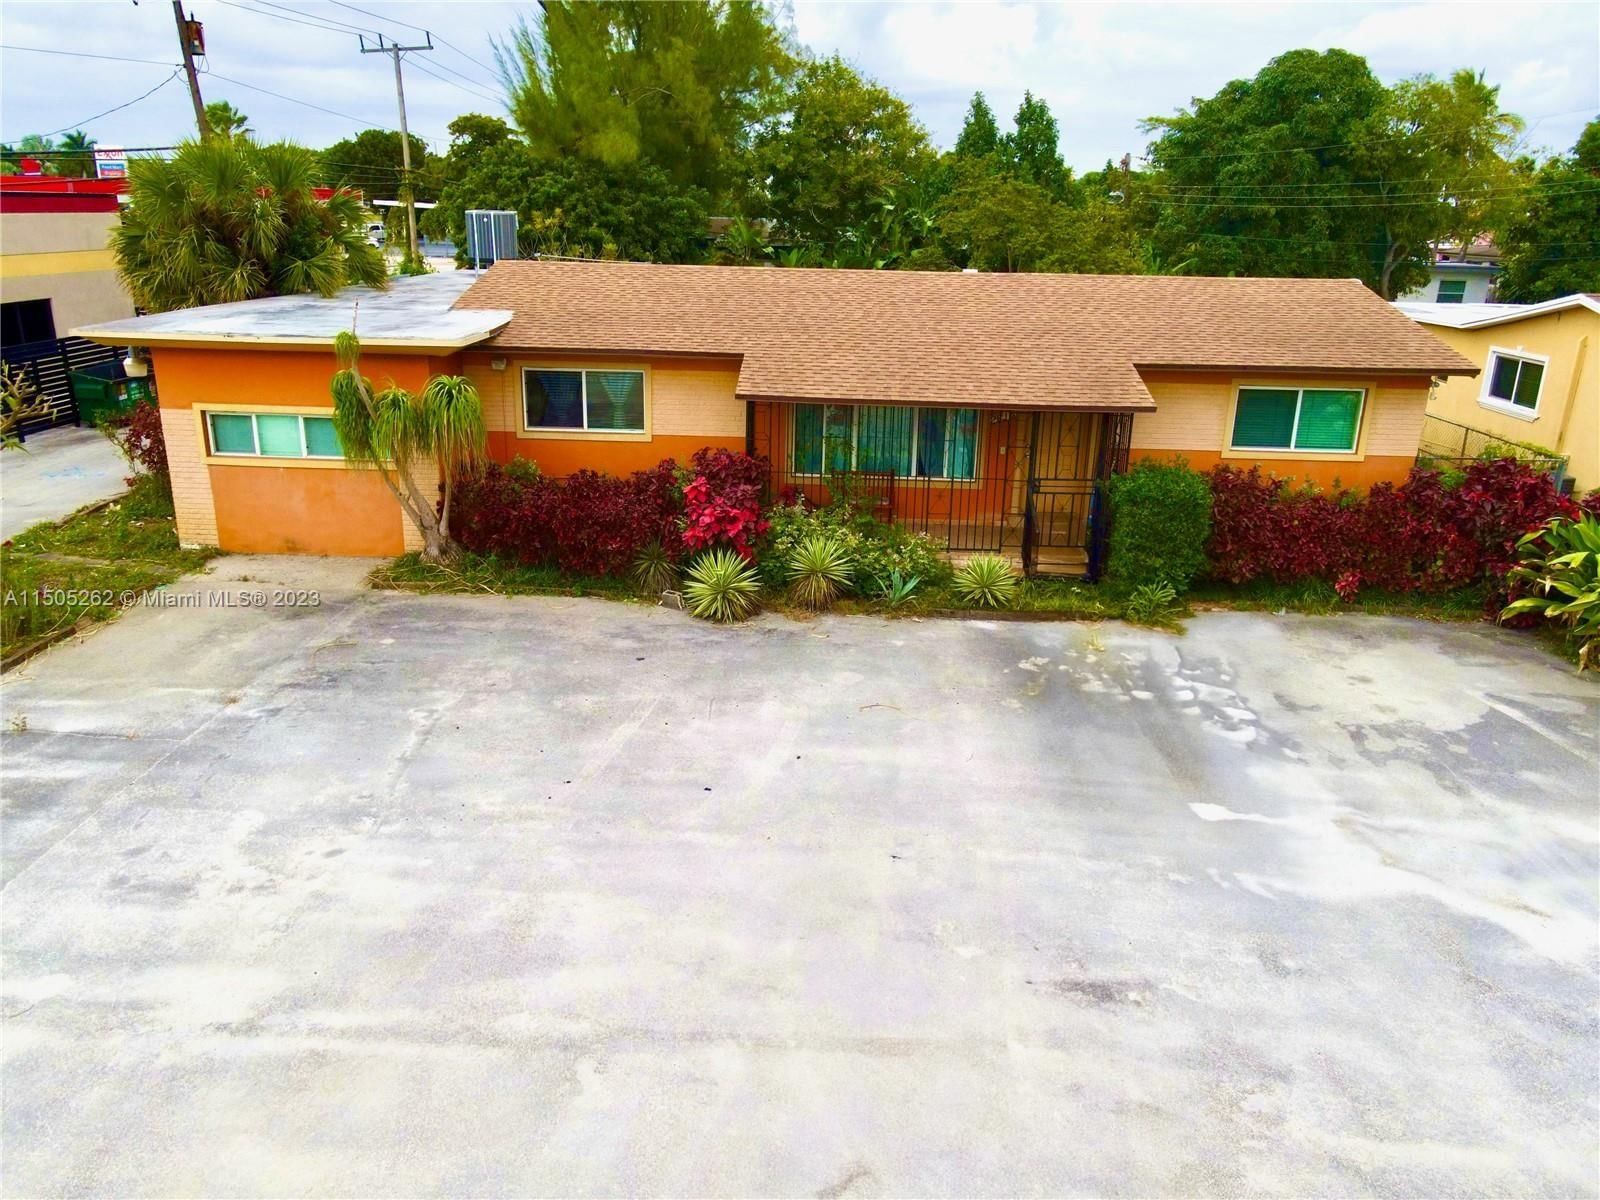 Real estate property located at 2615 111th St, Miami-Dade County, GOLF PARK SEC 2 REV, Miami, FL